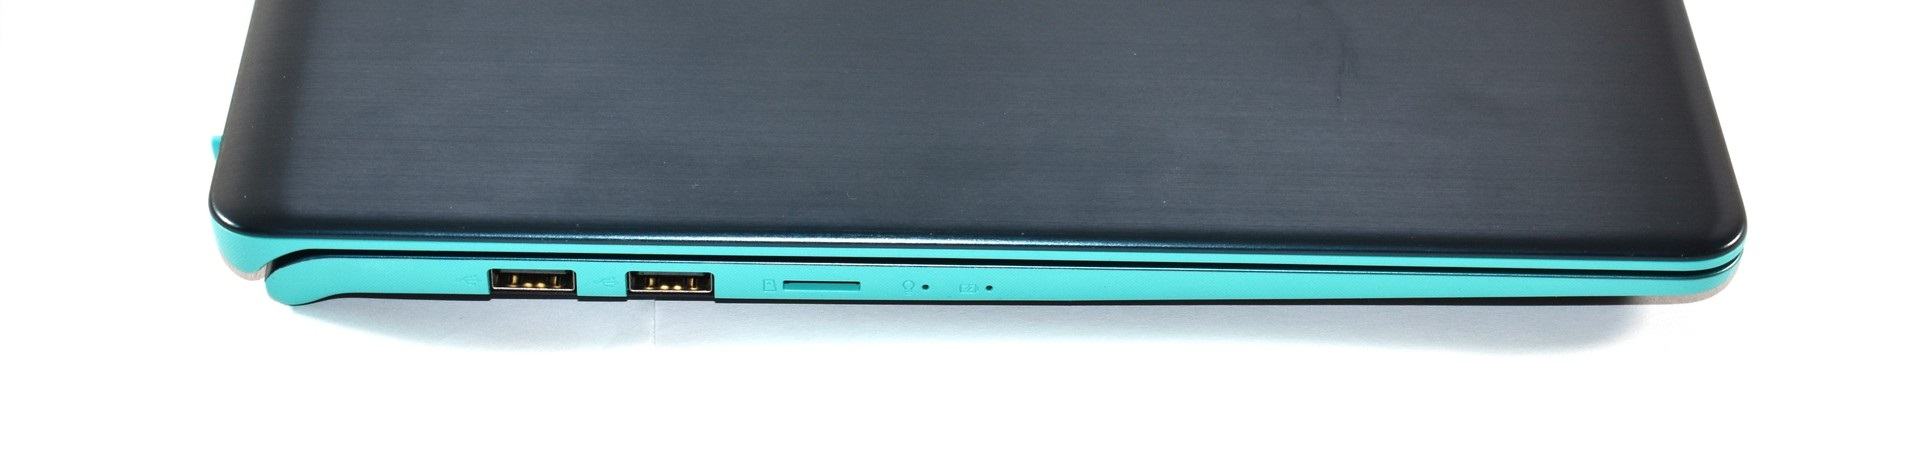 đánh giá Asus VivoBook S15 S530UN